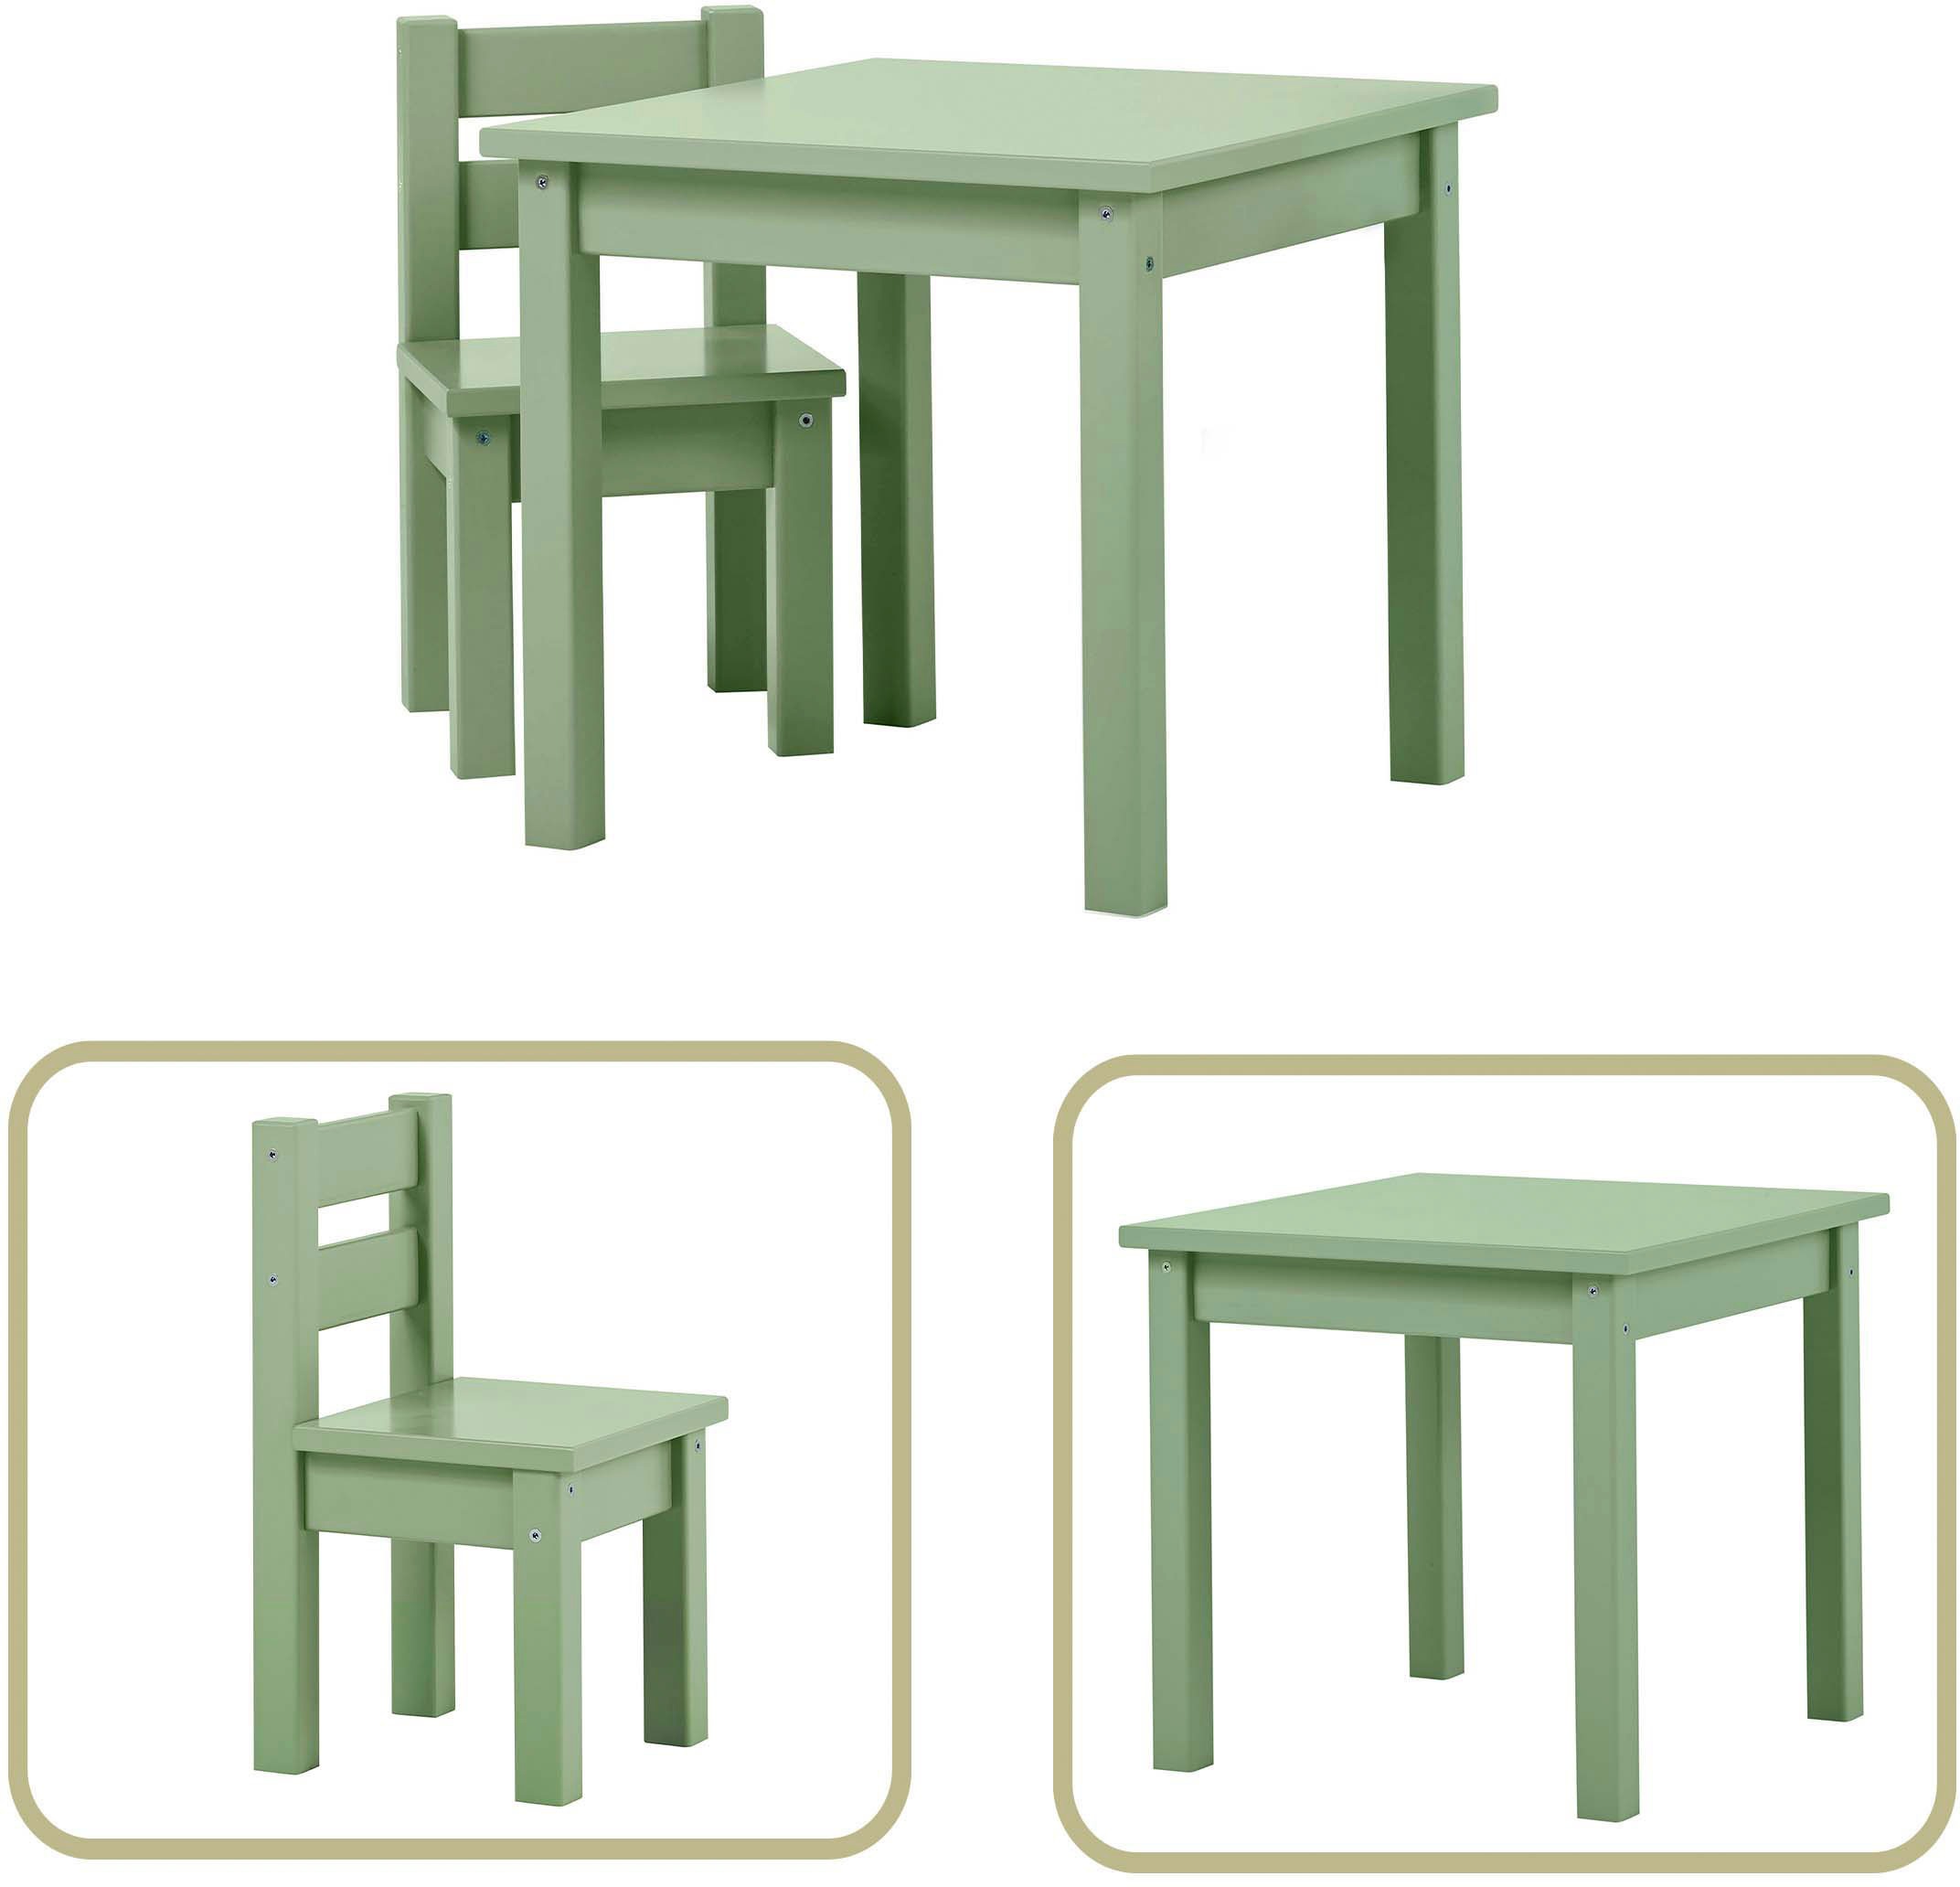 Kindersitzgruppe »MADS Kindersitzgruppe«, (Set, 2 tlg., 1 Tisch, 1 Stuhl), in vielen...